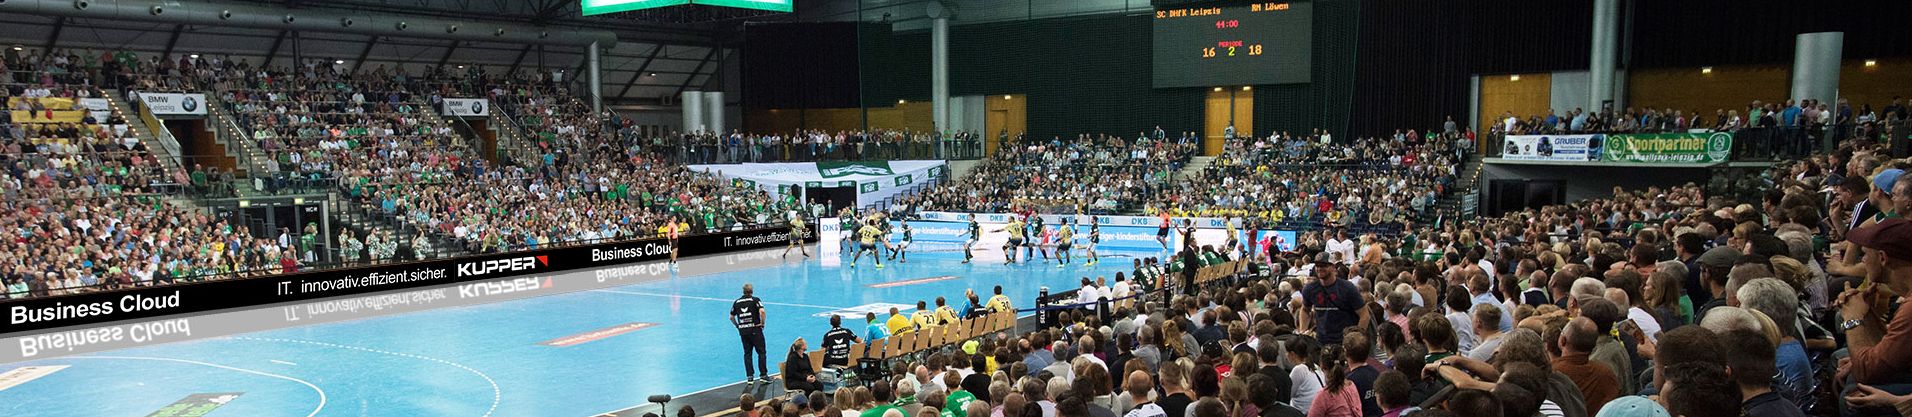 Kupper IT - Referenz SC DHfK Handball